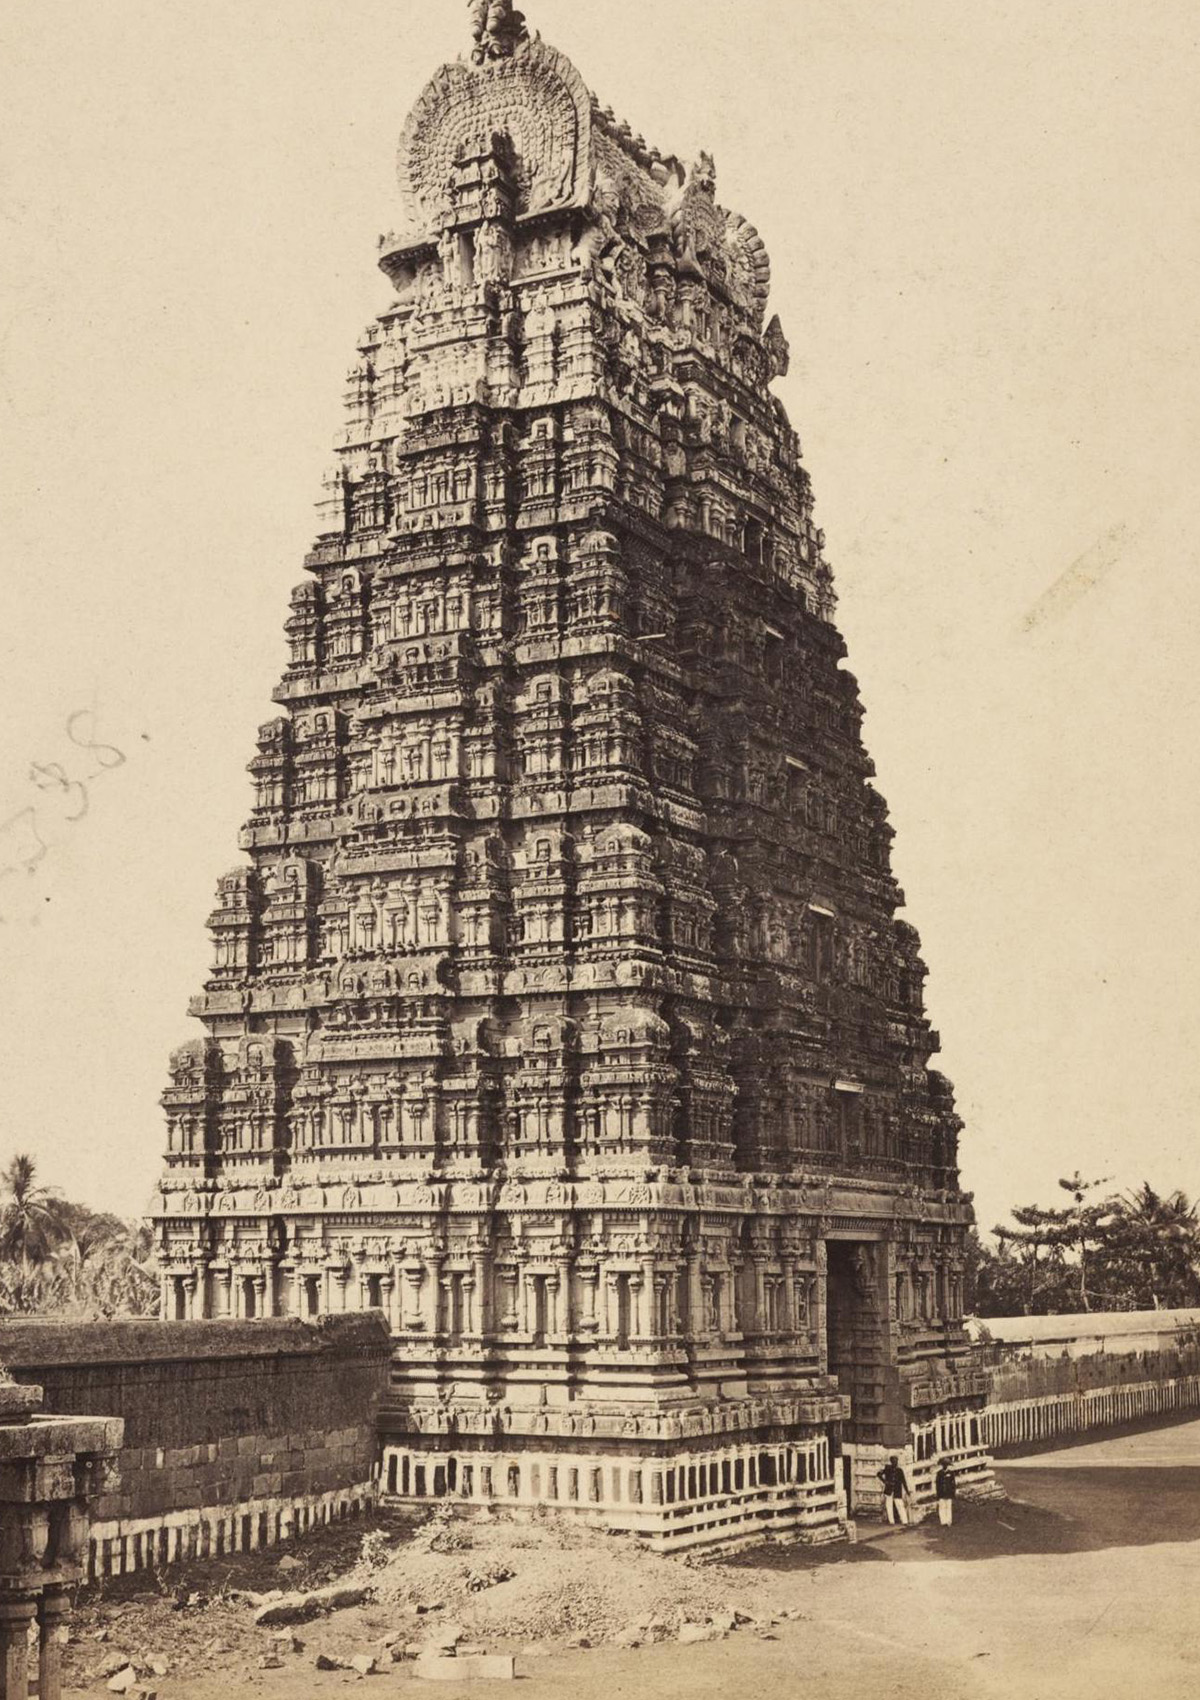 A sepia-toned photograph of the principal gopuram of a temple in Kanchipuram, Tamil Nadu.